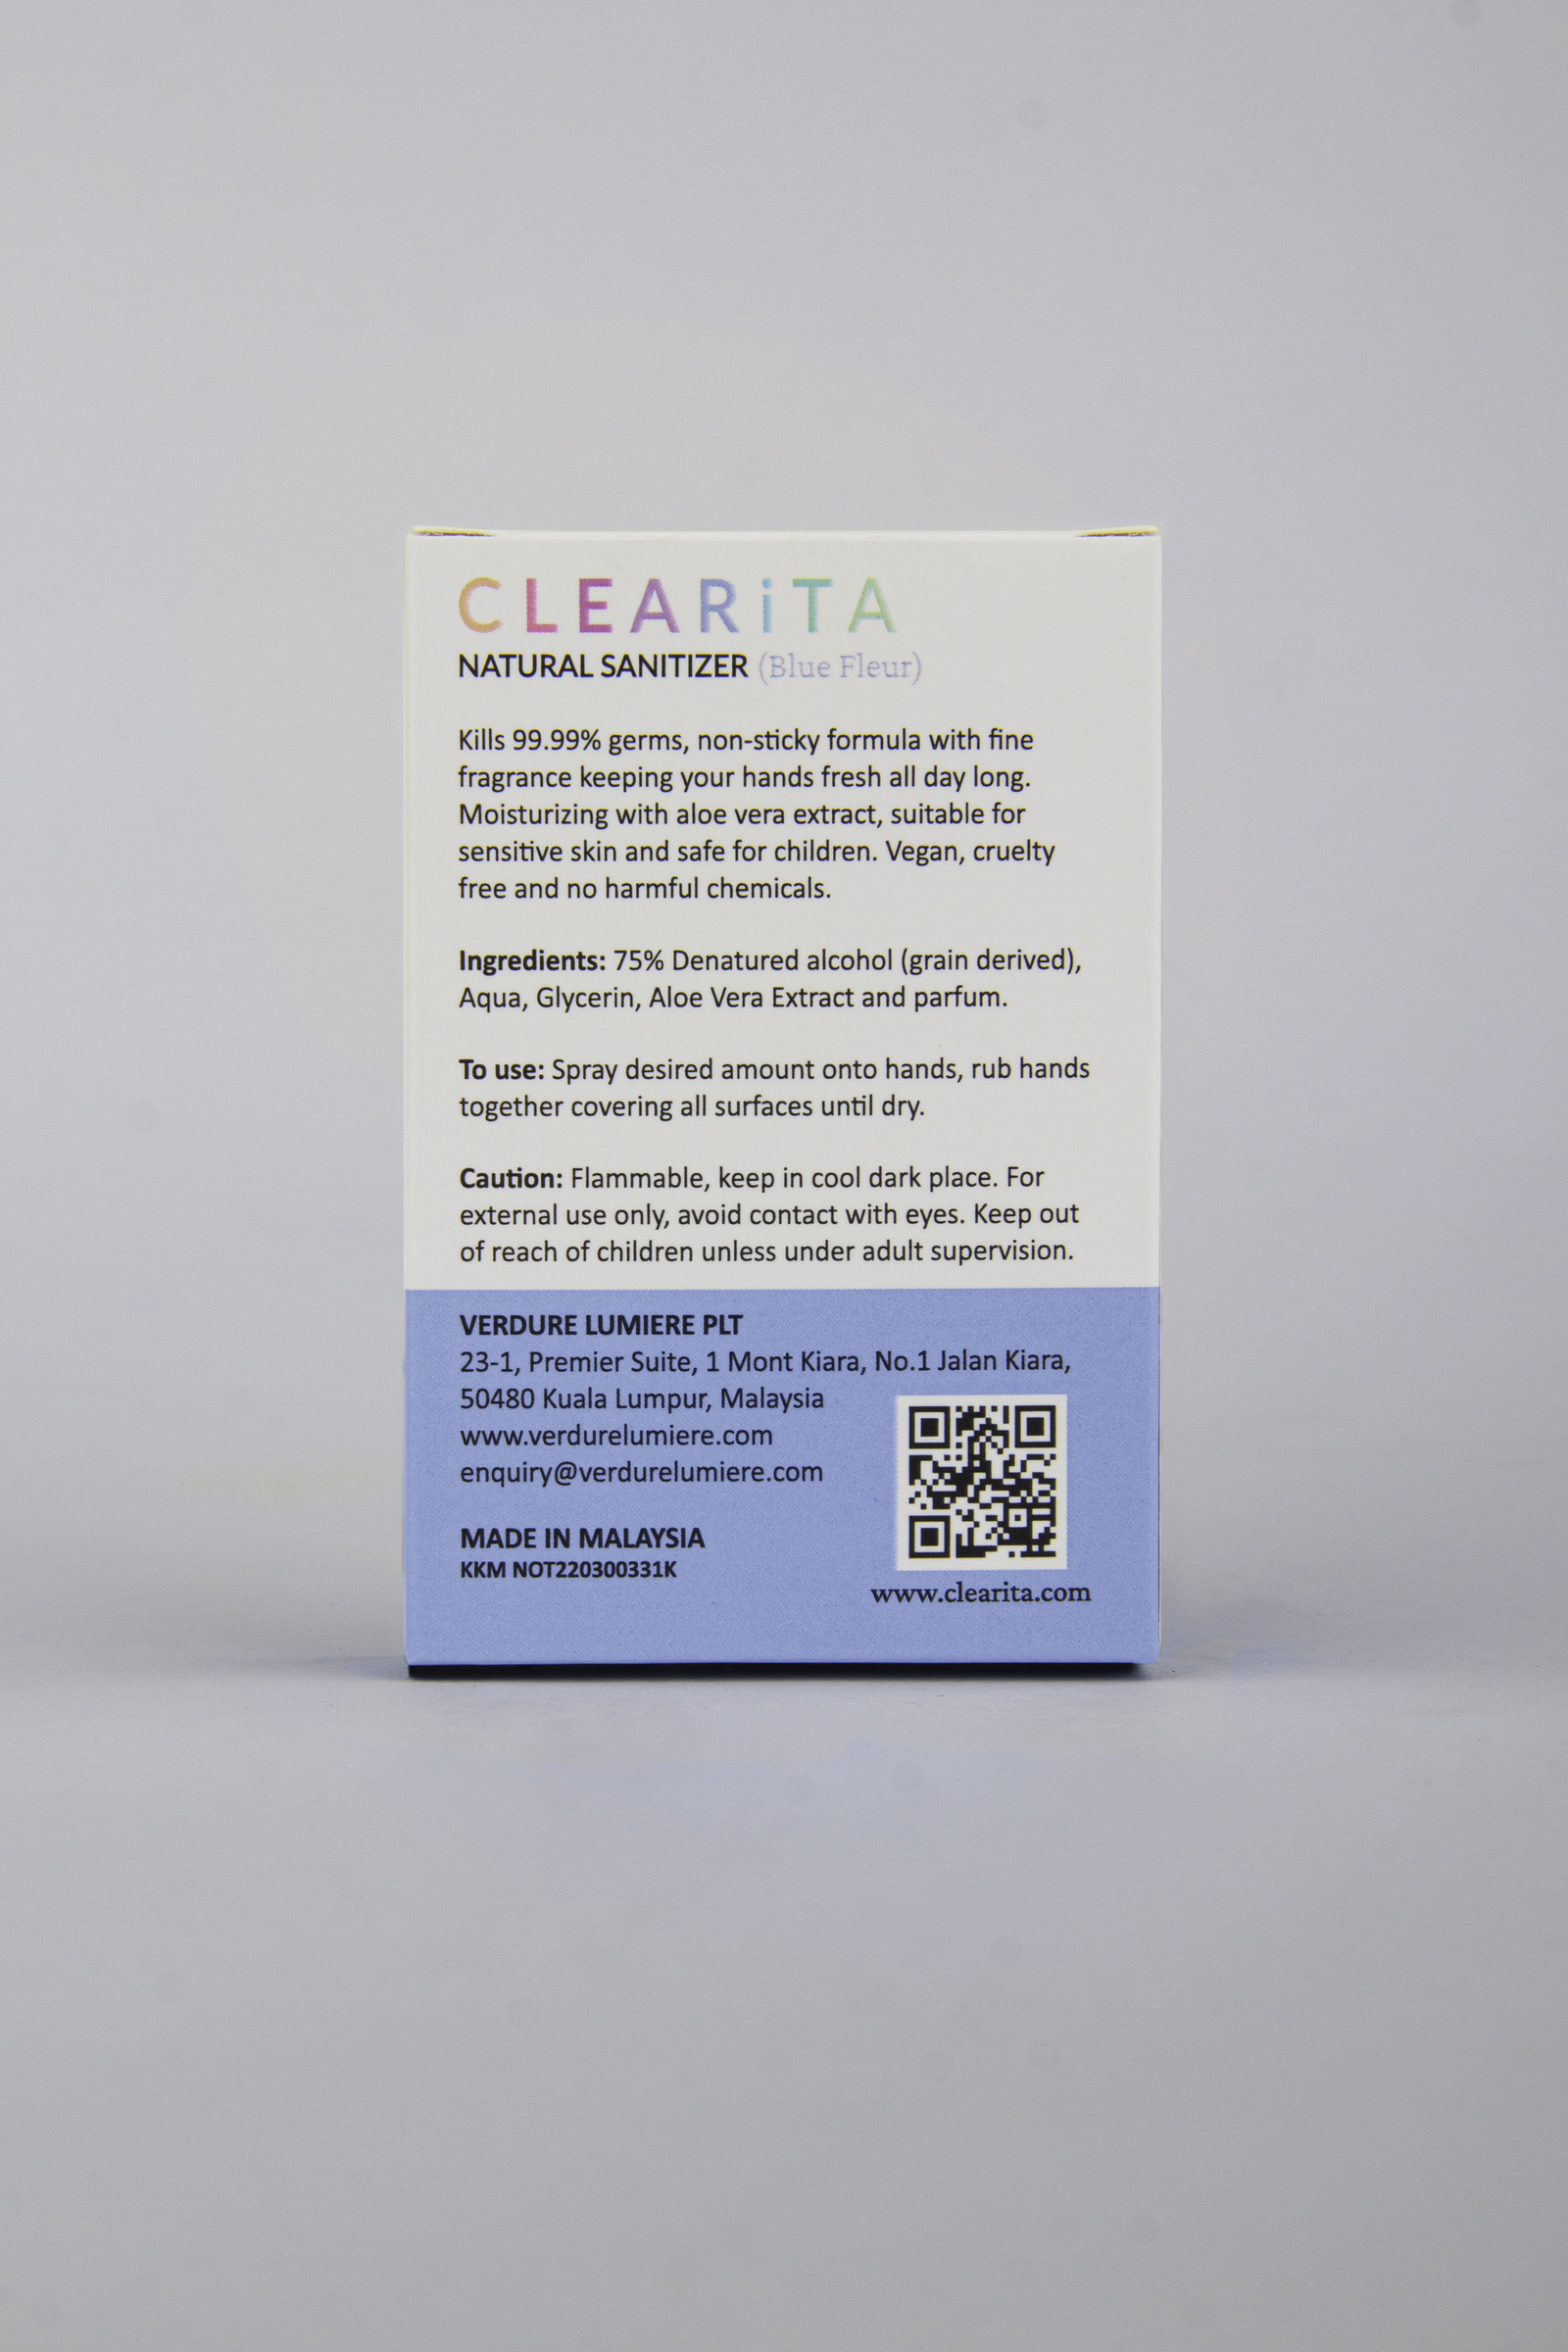 Clearita Natural Sanitizer Spray Blue Fleur